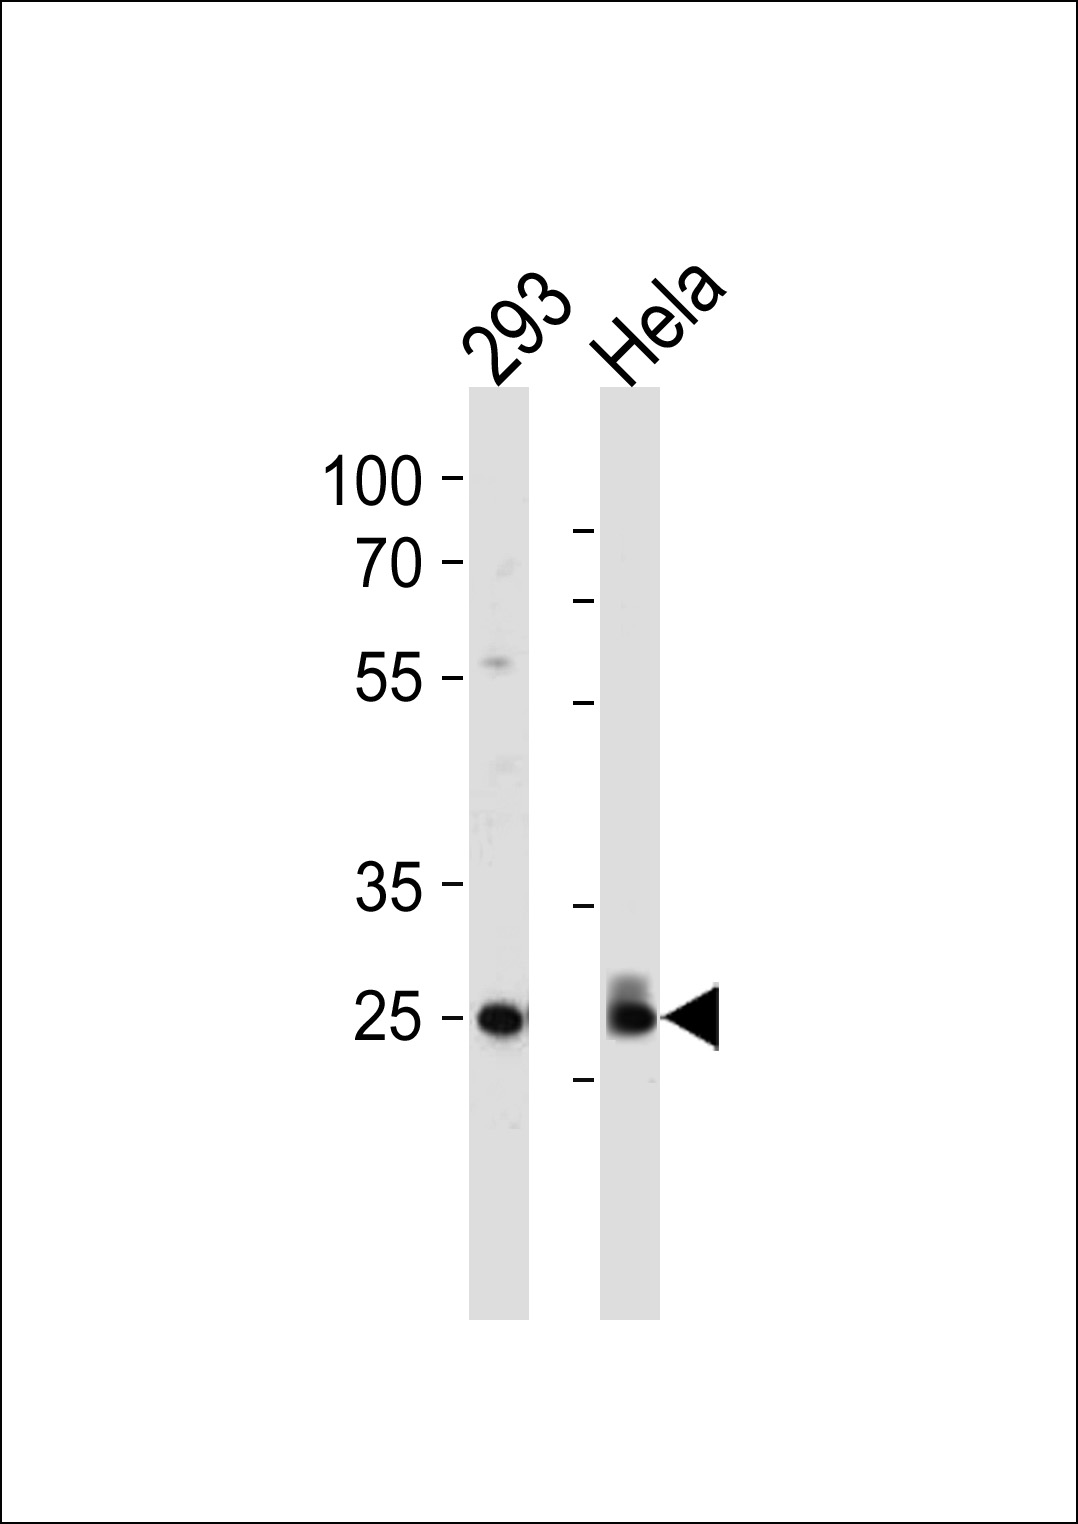 Cdk2 Antibody (T14) (Cat. #AP7518d) western blot analysis in 293,Hela cell line lysates (35ug/lane).This demonstrates the hCdk2 antibody detected the hCdk2 protein (arrow).